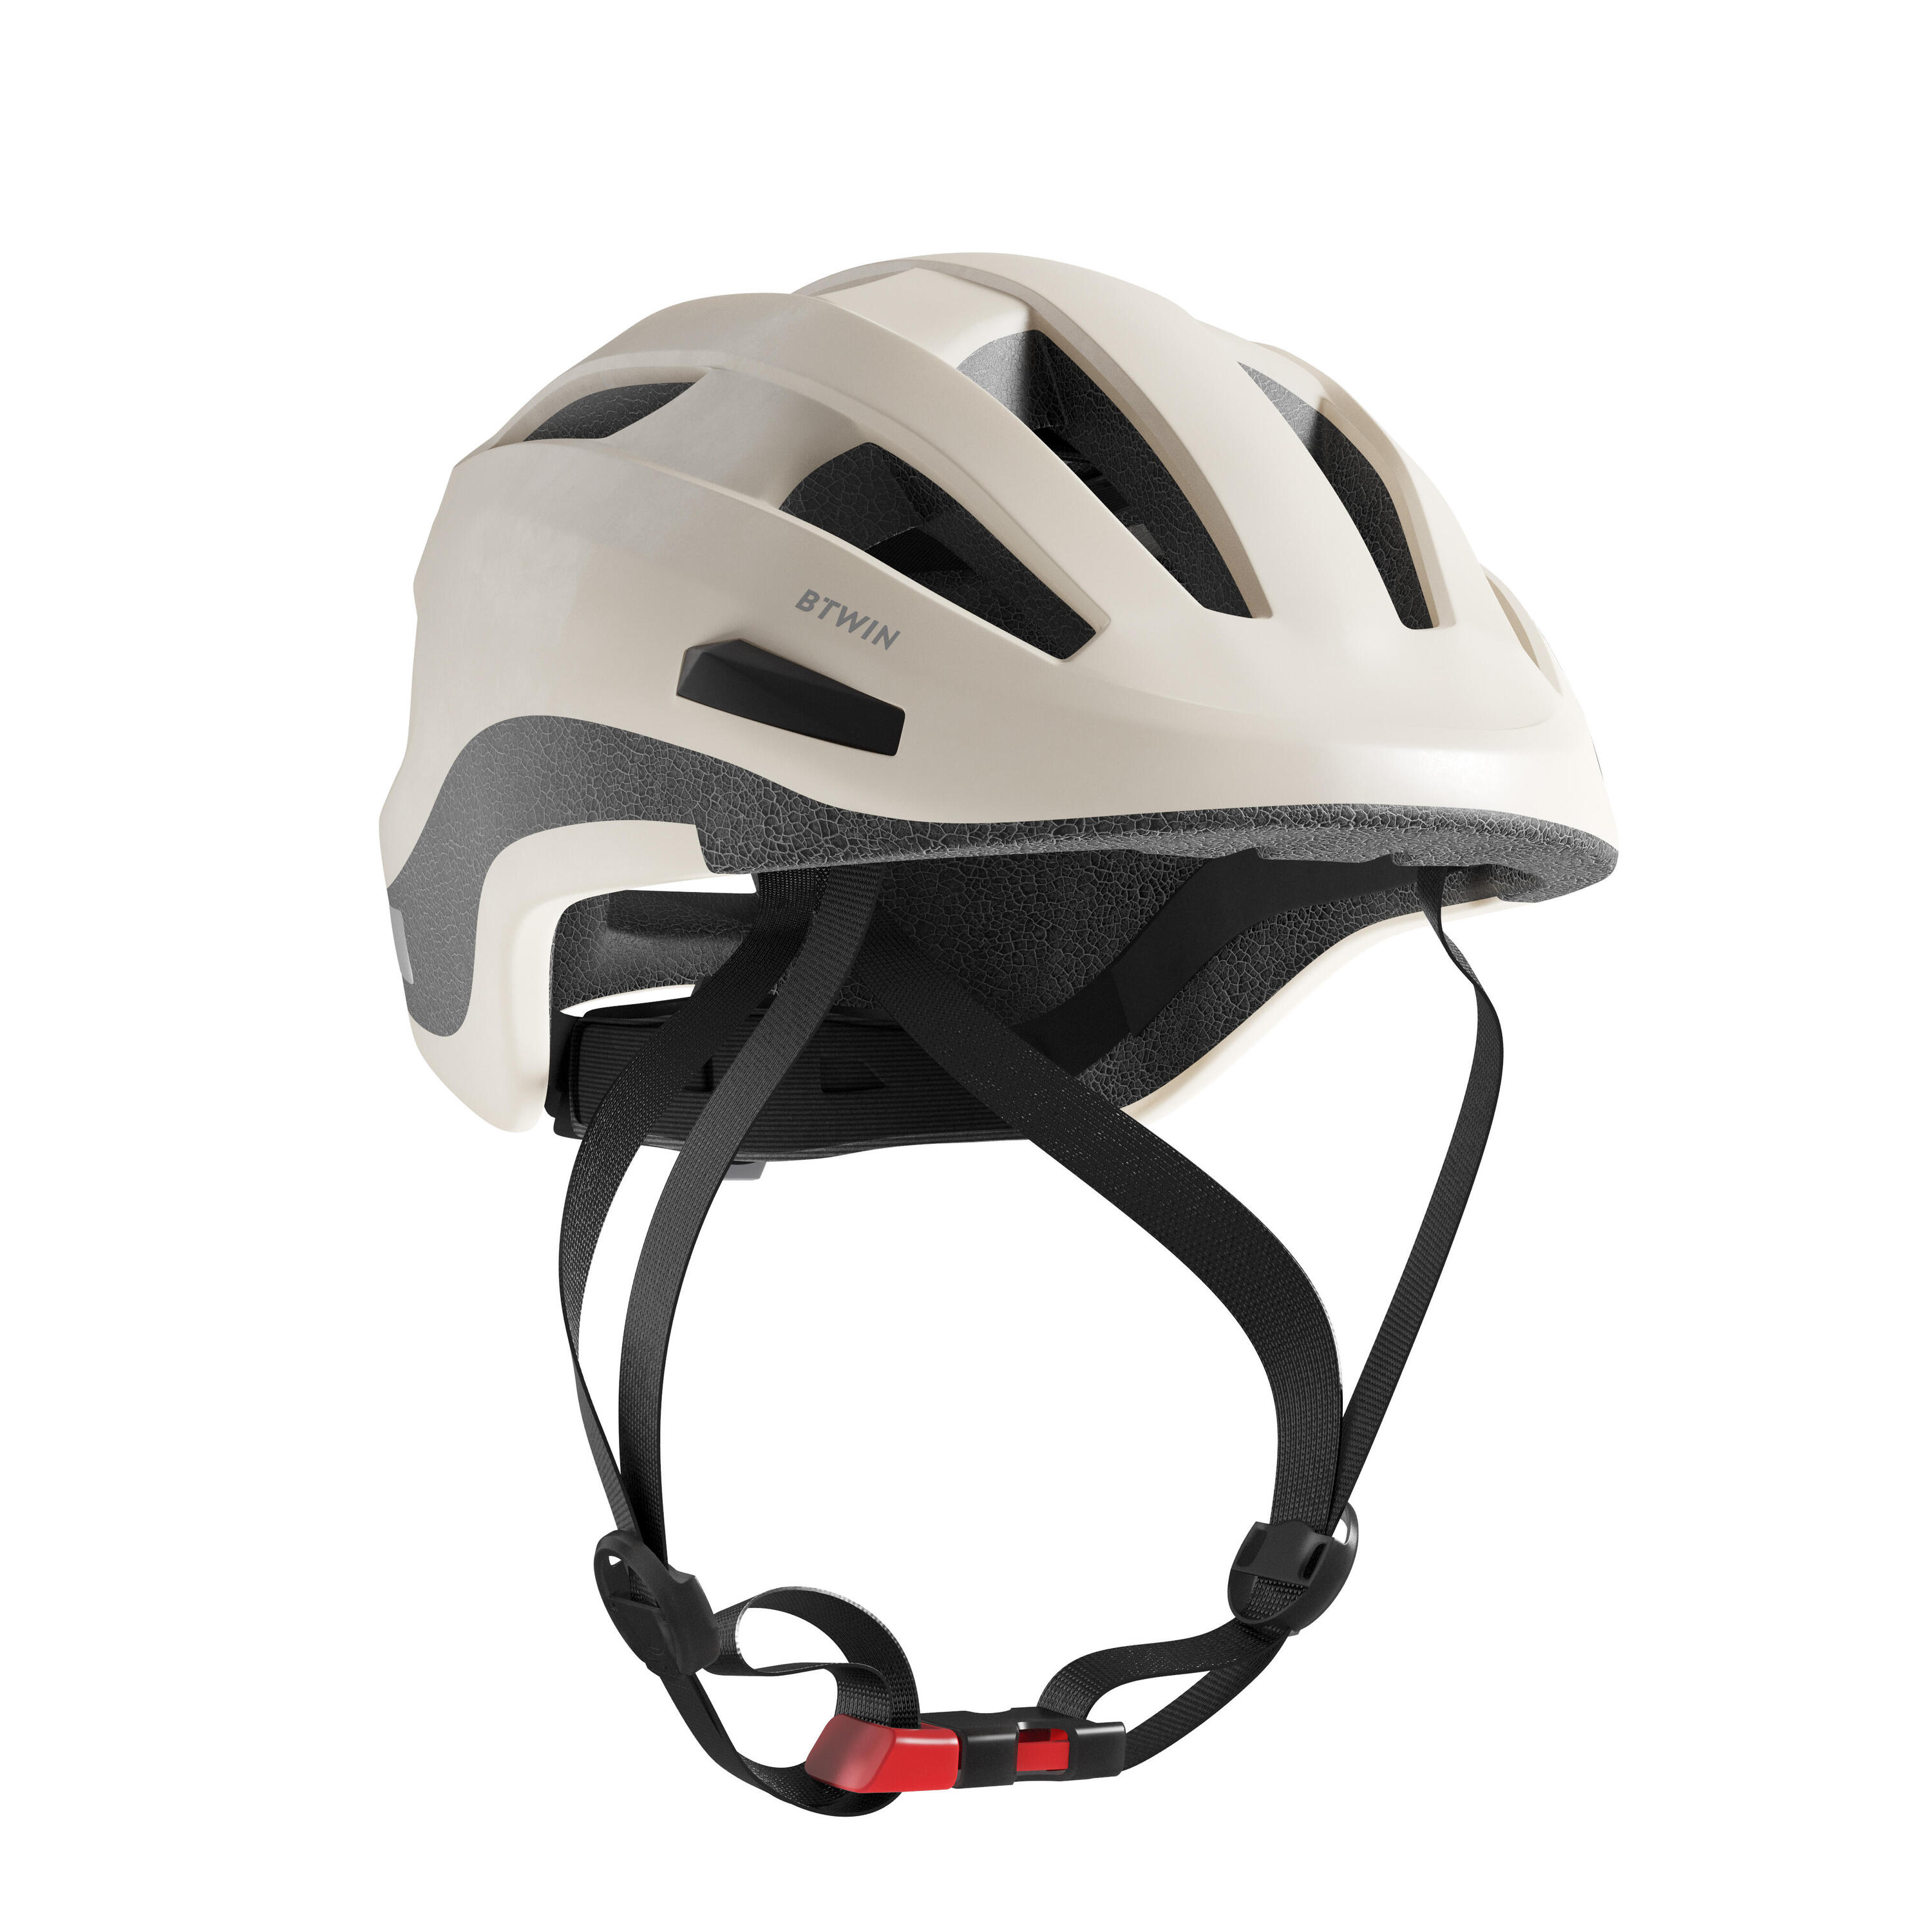 BTWIN City Cycling Helmet 500